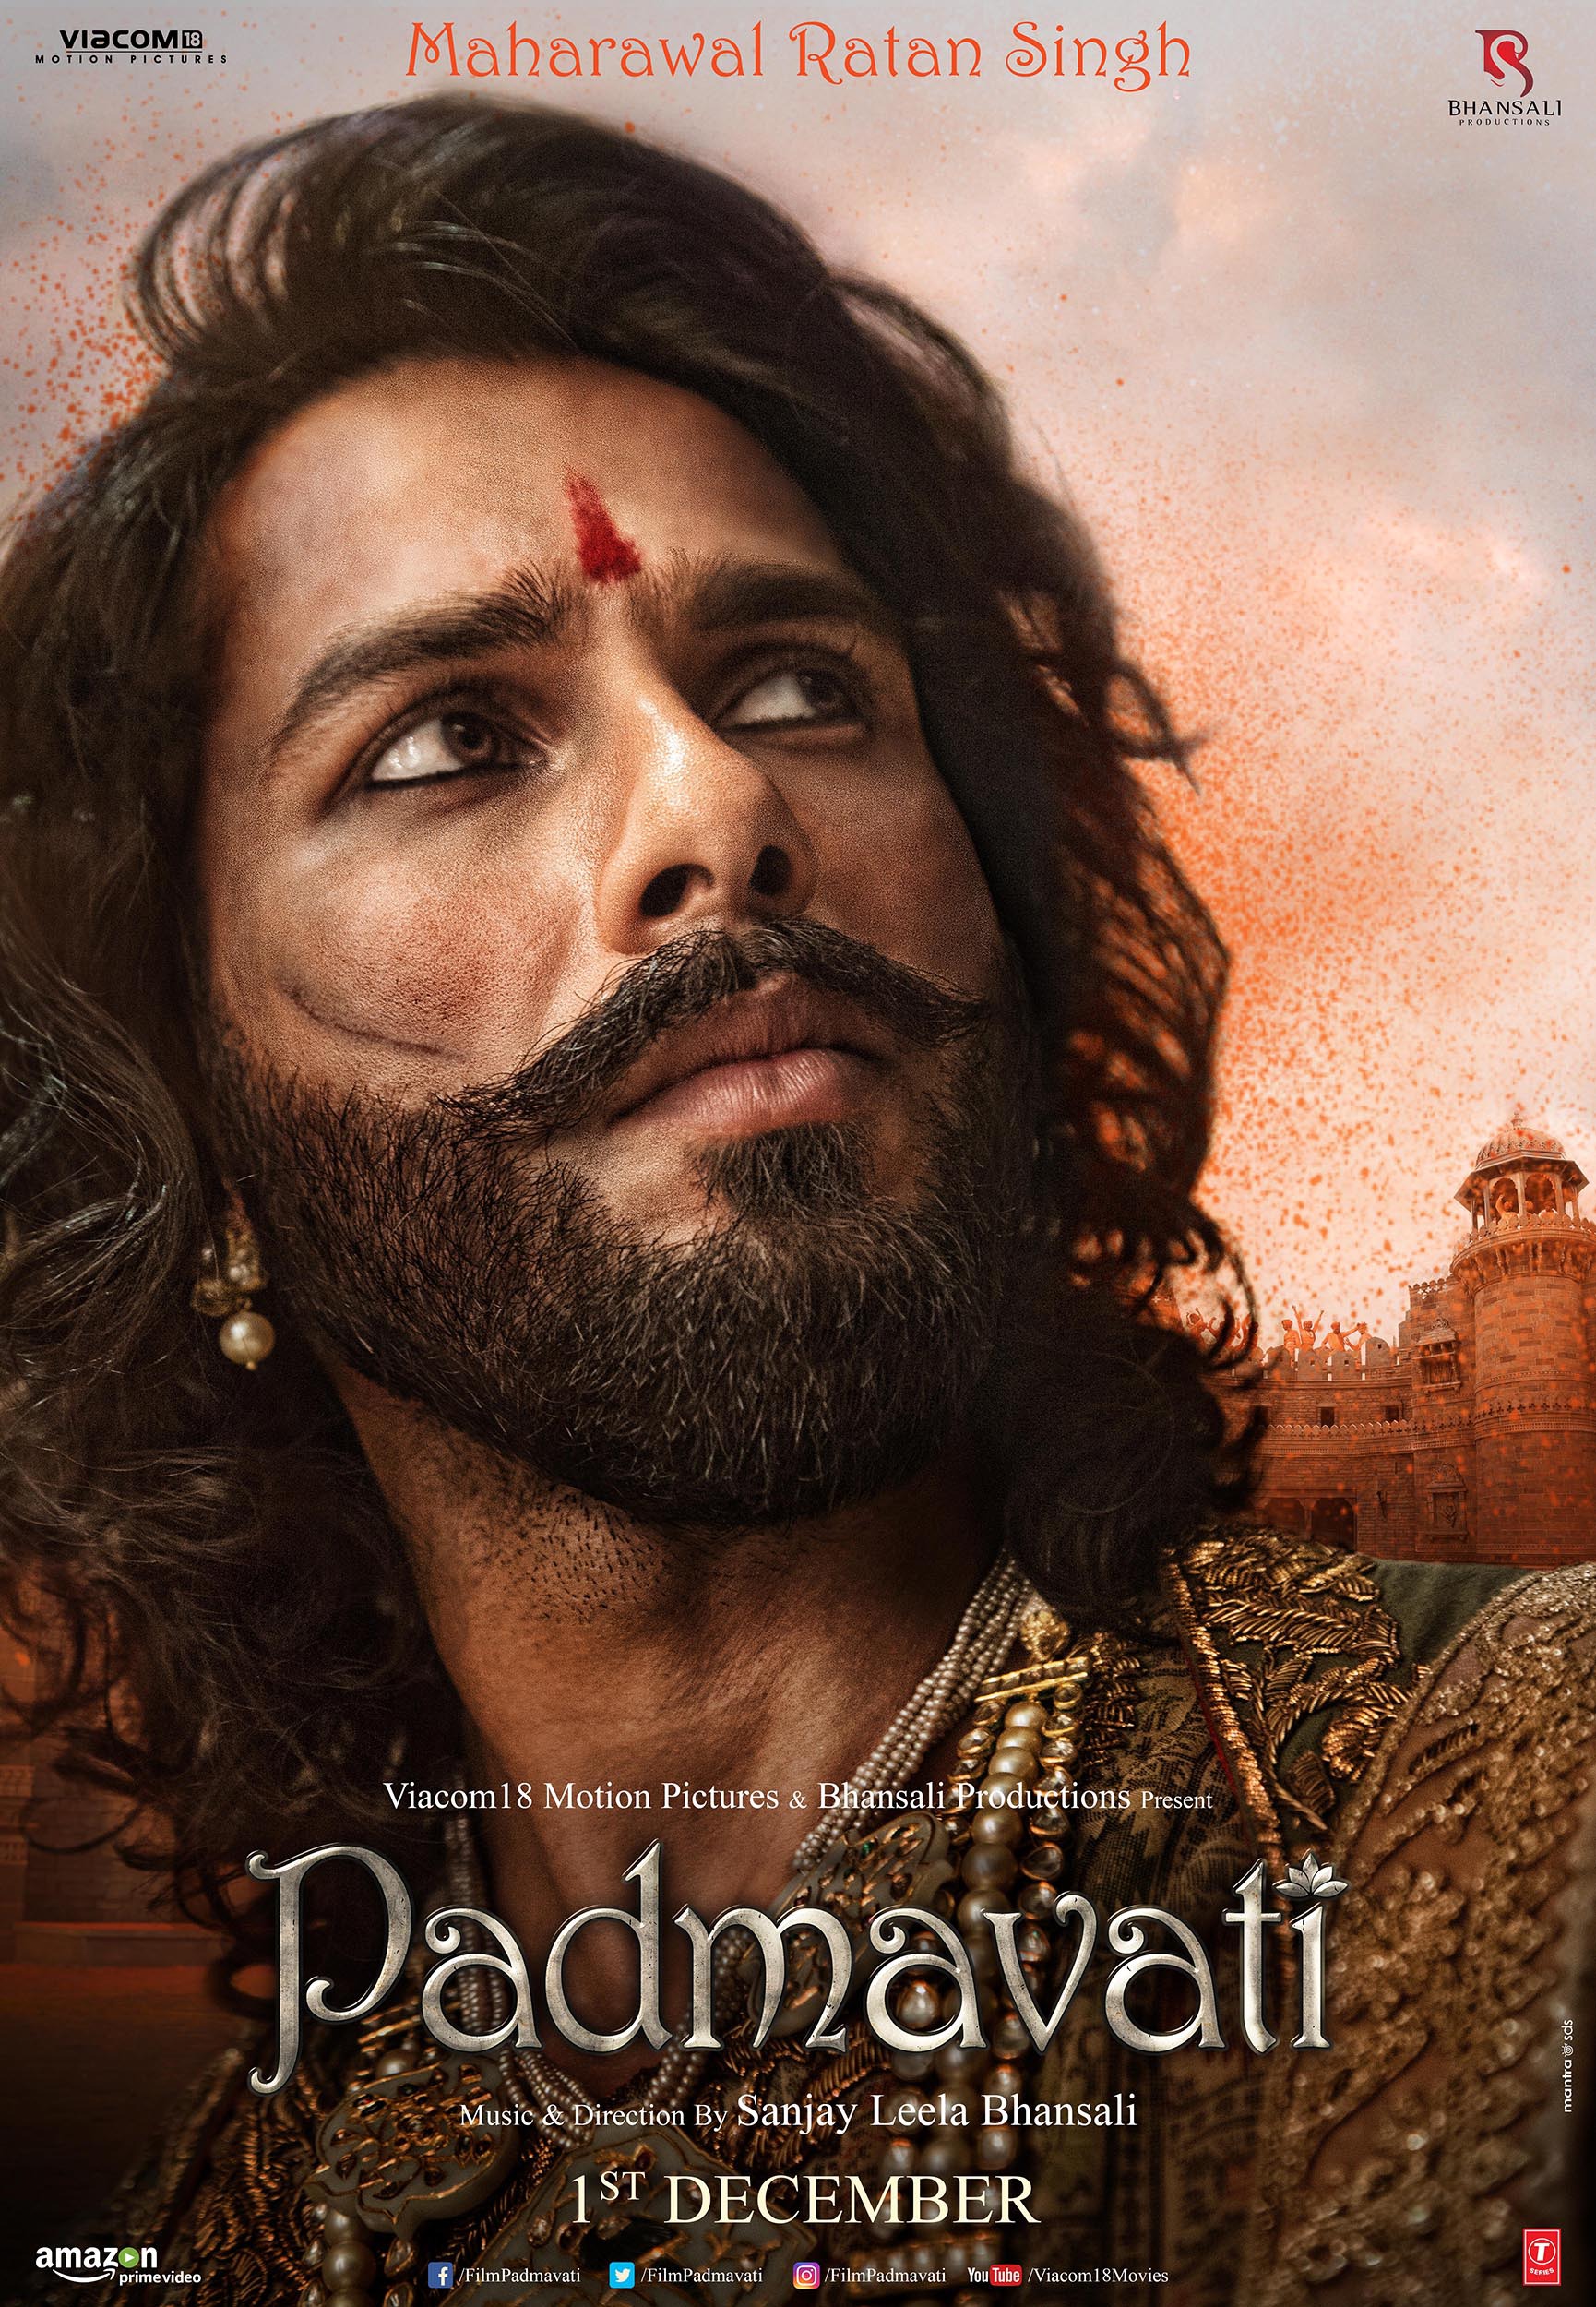 Mega Sized Movie Poster Image for Padmavati (#3 of 9)